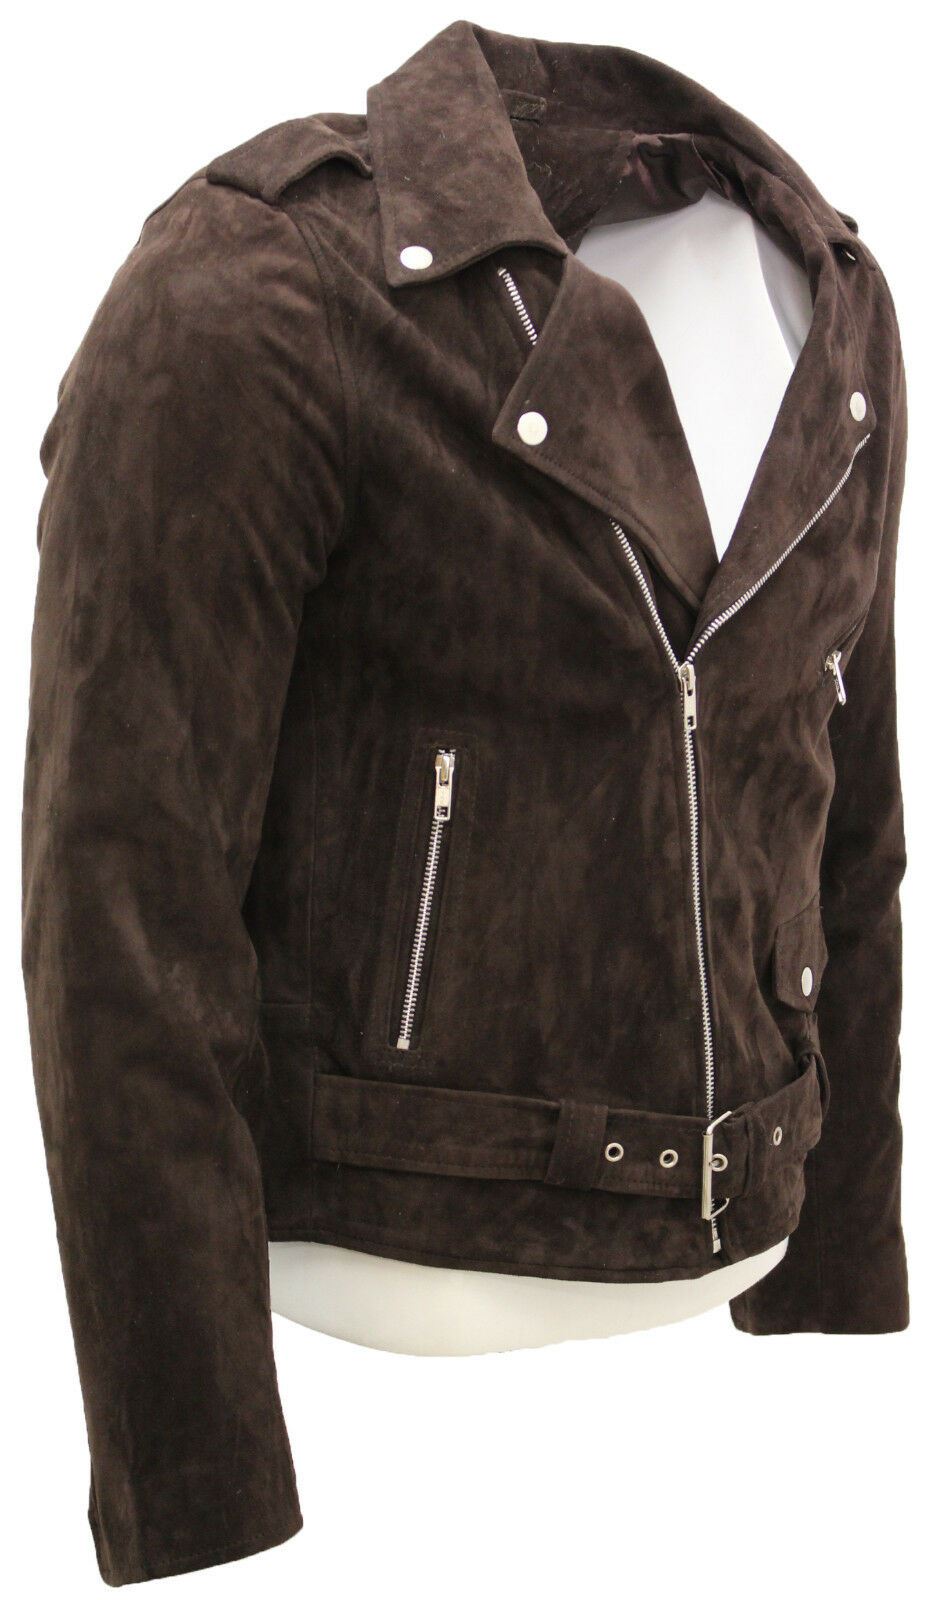 Mens Suede Leather Brando Biker Jacket-Stratford - Upperclass Fashions 